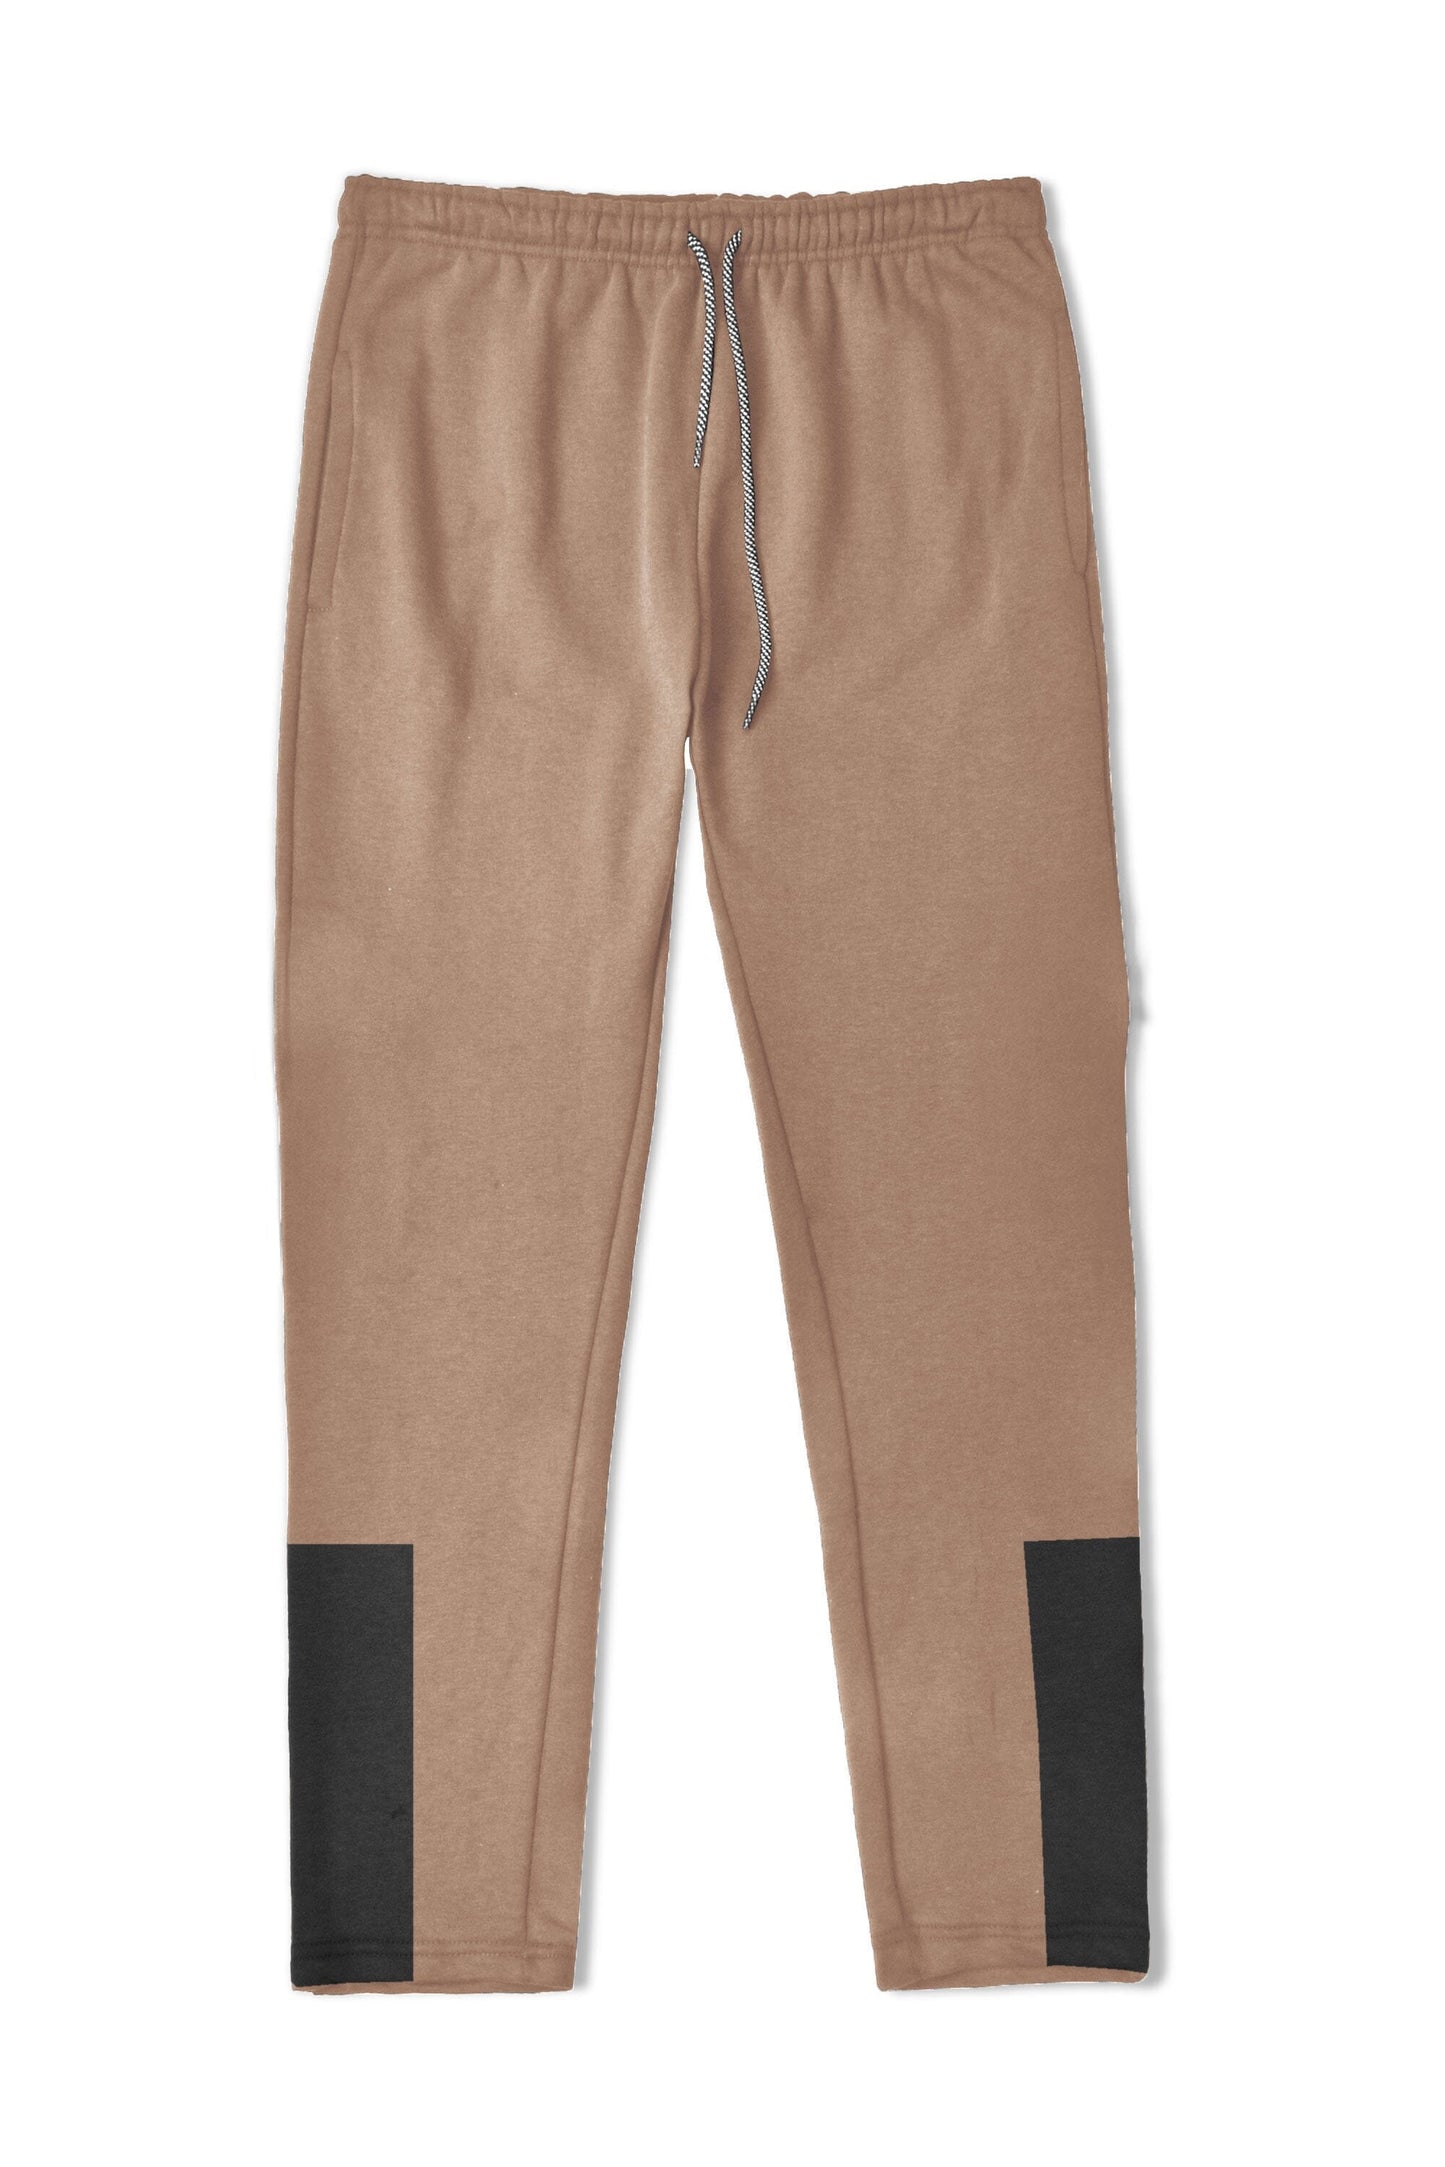 MAX 21 Men's Bottom Panel Style Fleece Trousers Men's Trousers SZK 